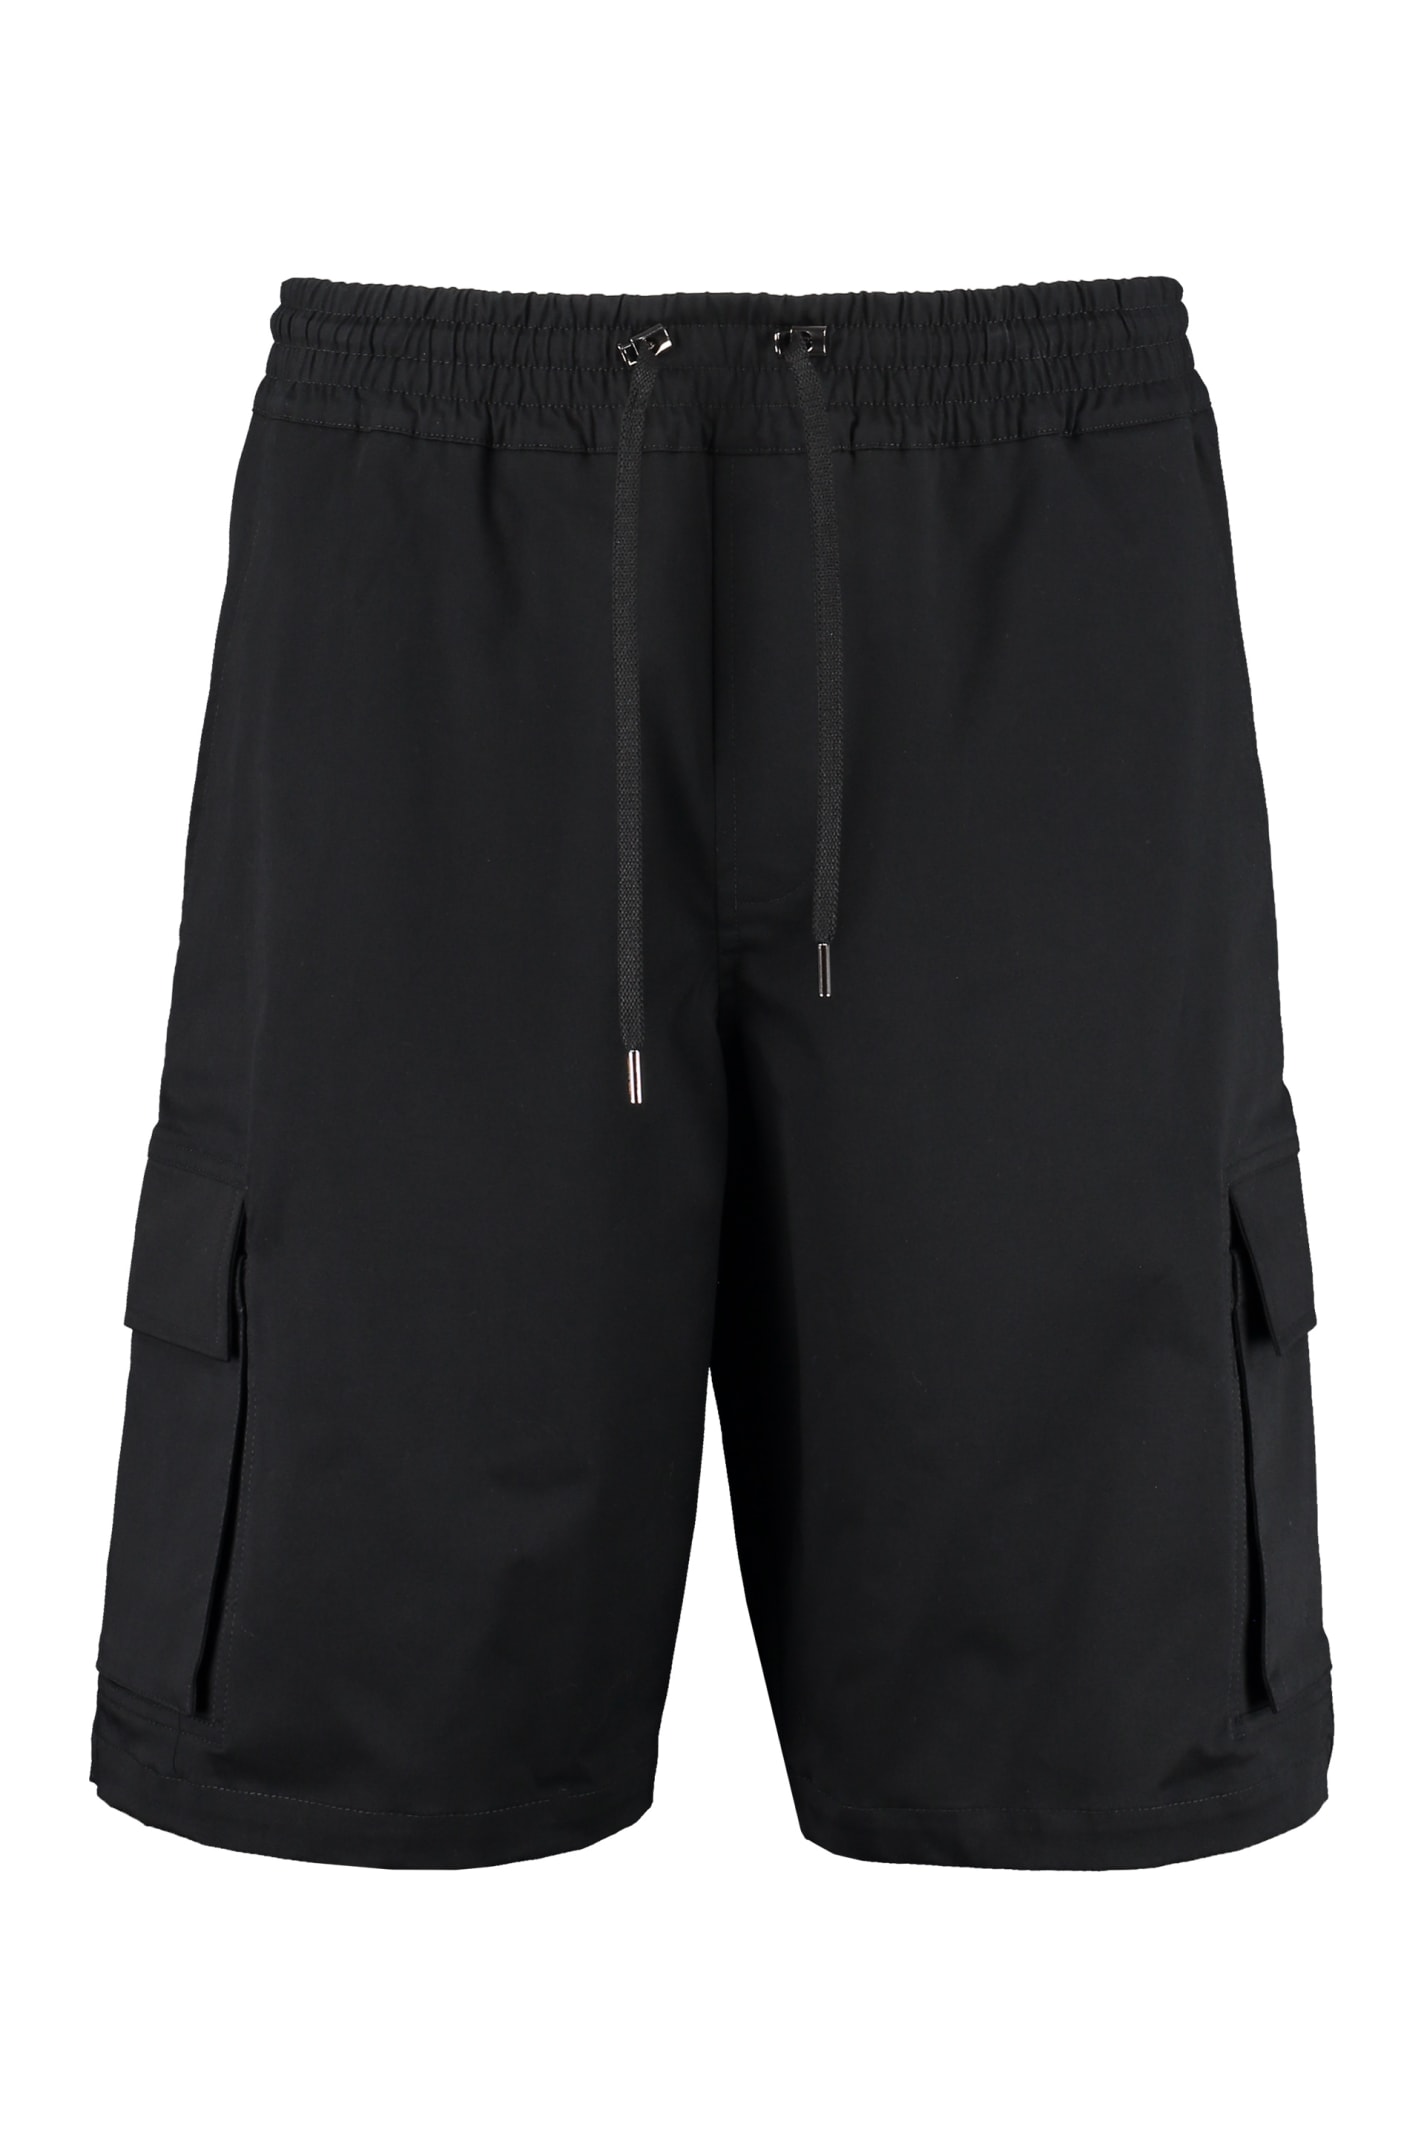 Neil Barrett Cotton Cargo Bermuda Shorts